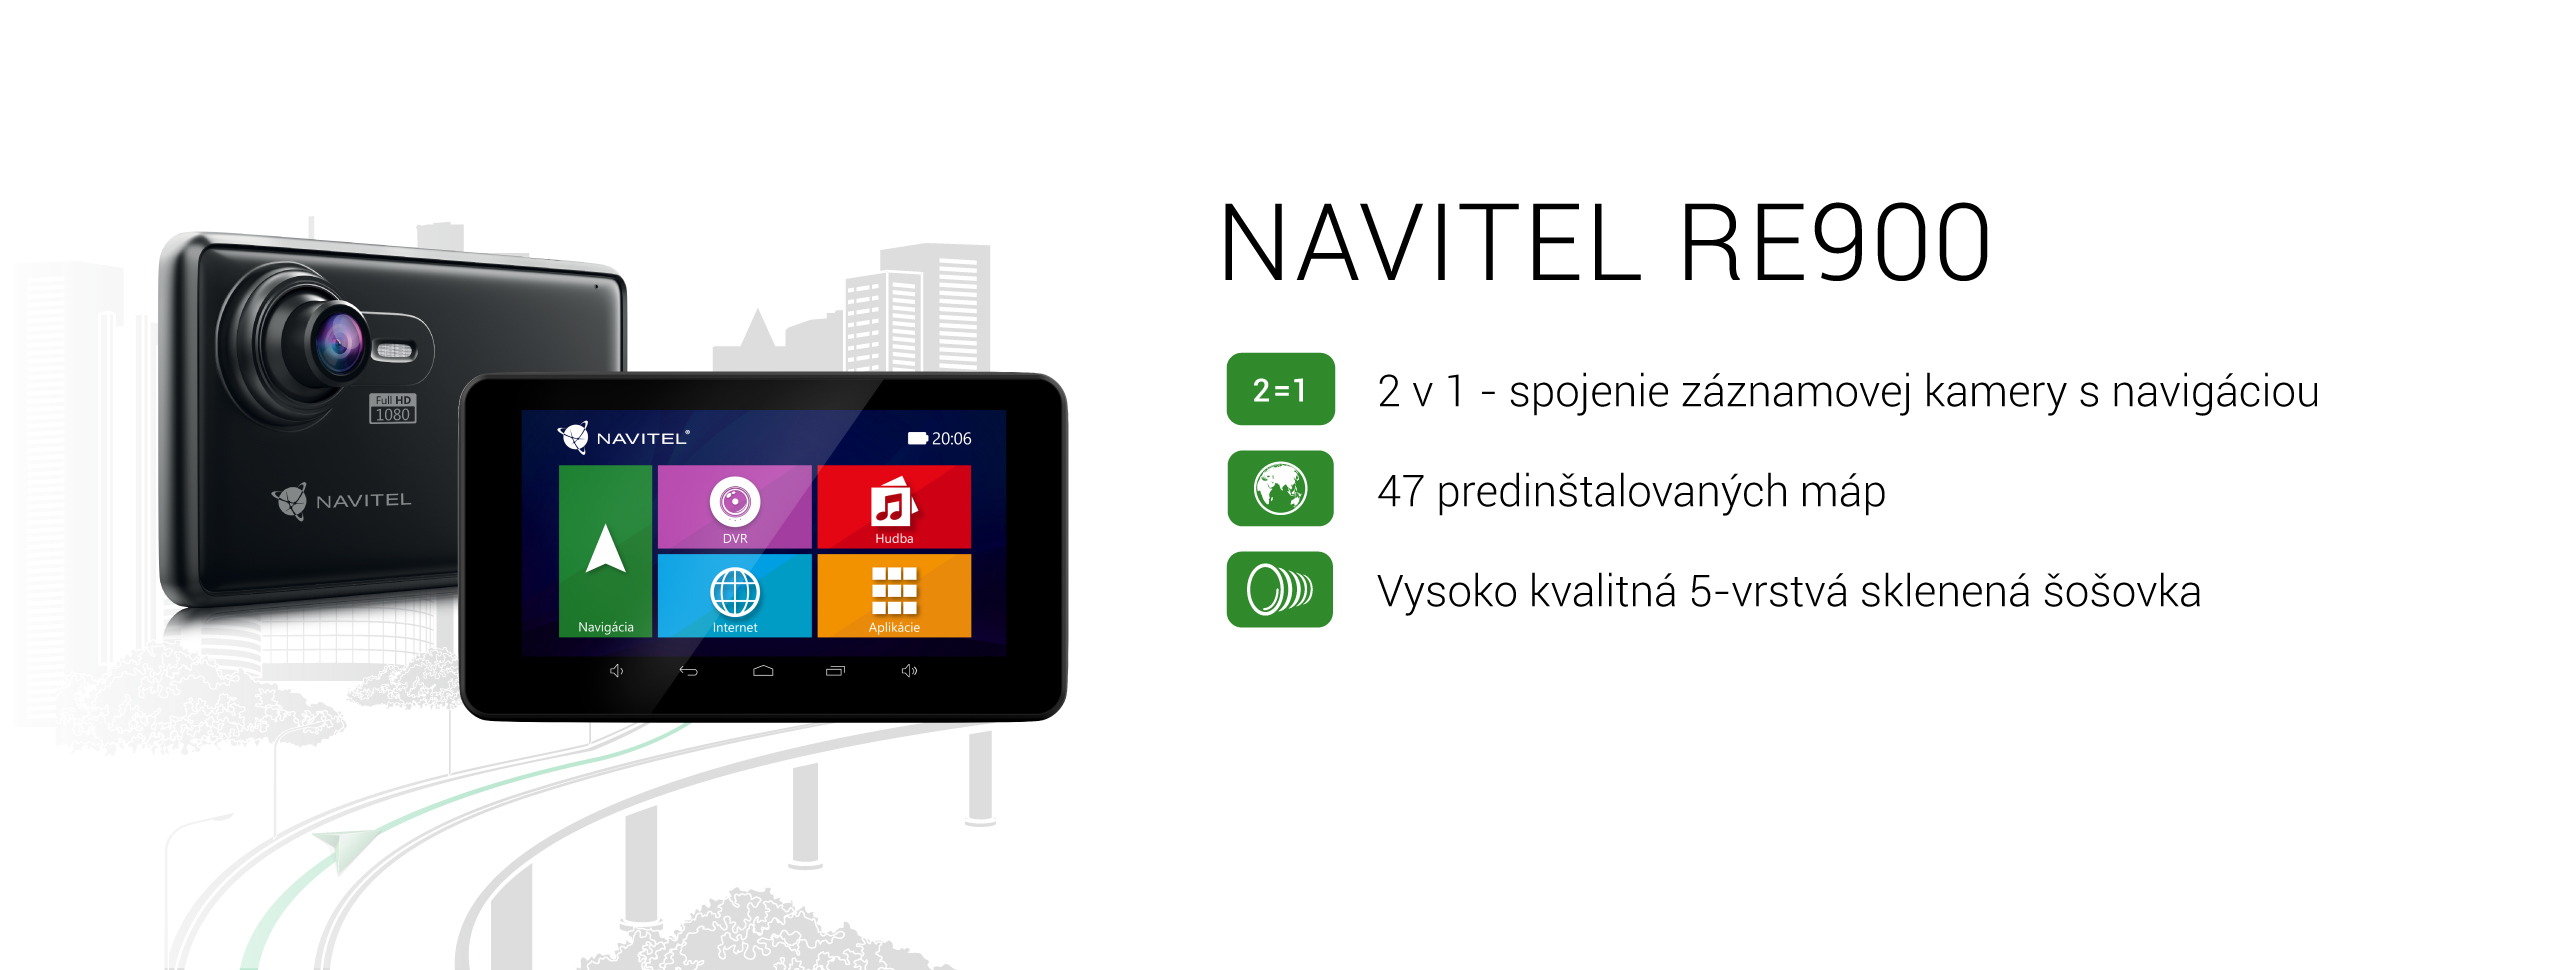 NAVITEL RE900 Full HD kombinuje funkcie kamery a navigácie